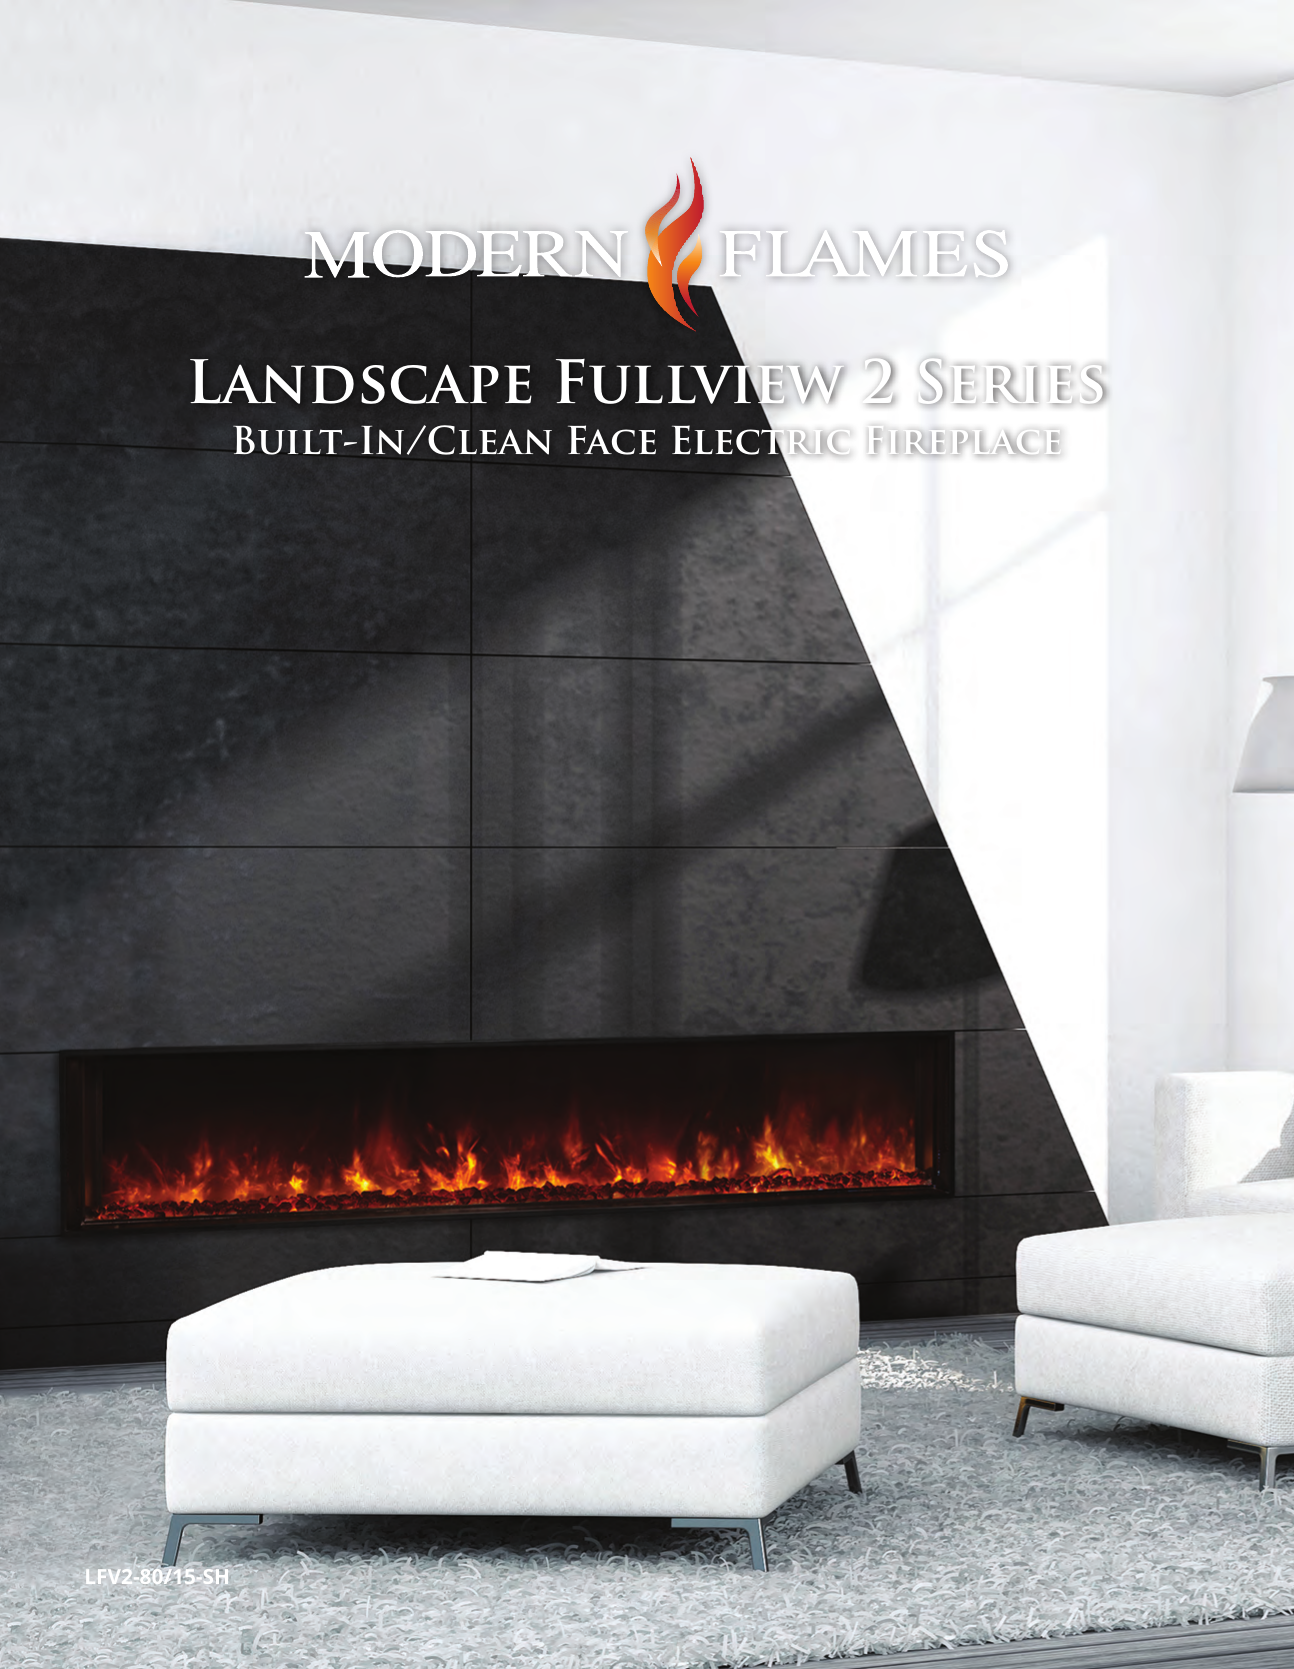 Landscape Fullview 2 Series Manualzz, Modern Flames Landscape Fullview